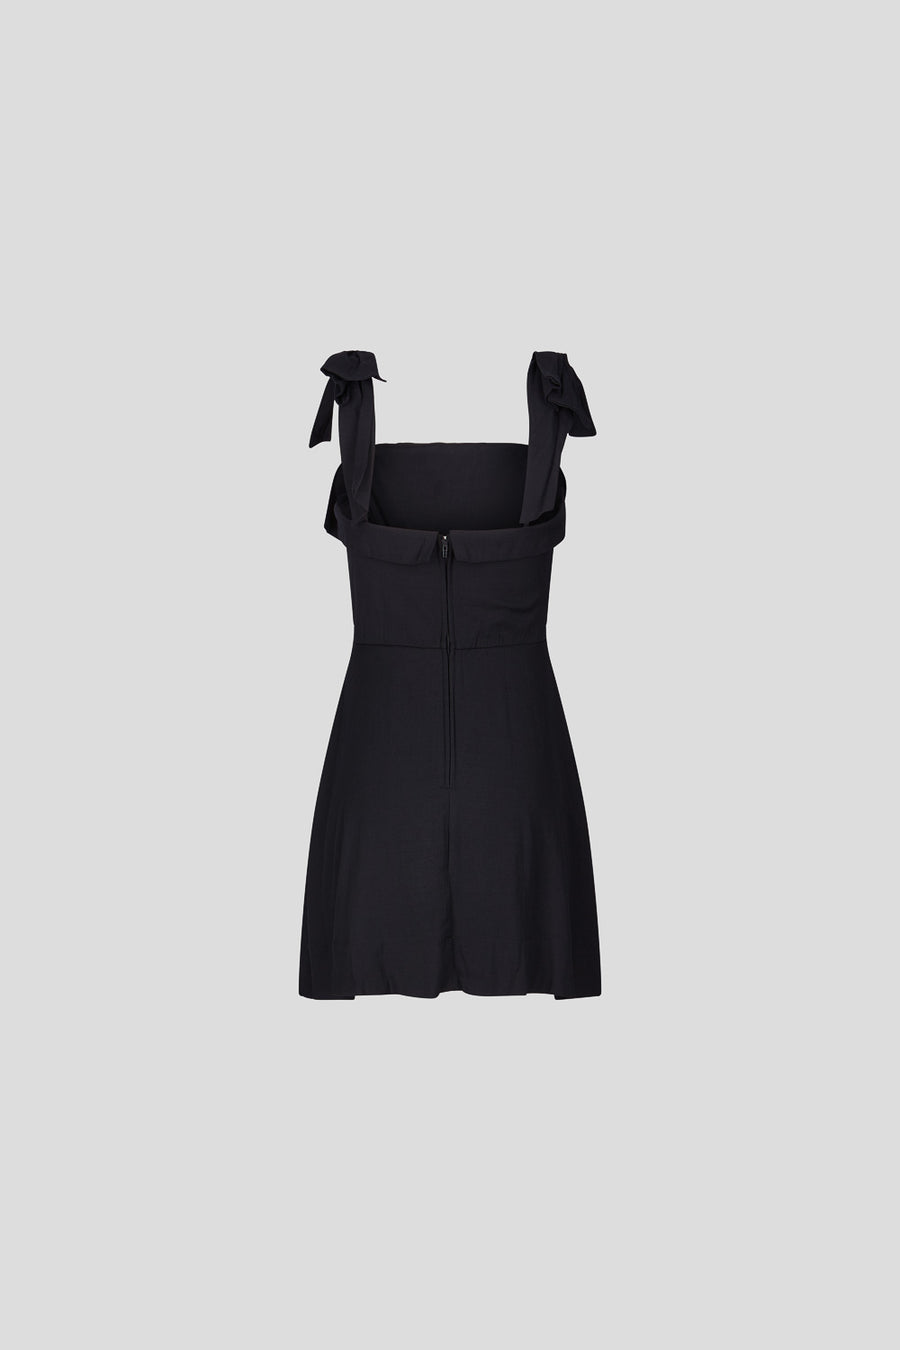 Black Tie Shoulder Dress - Trixxi Clothing